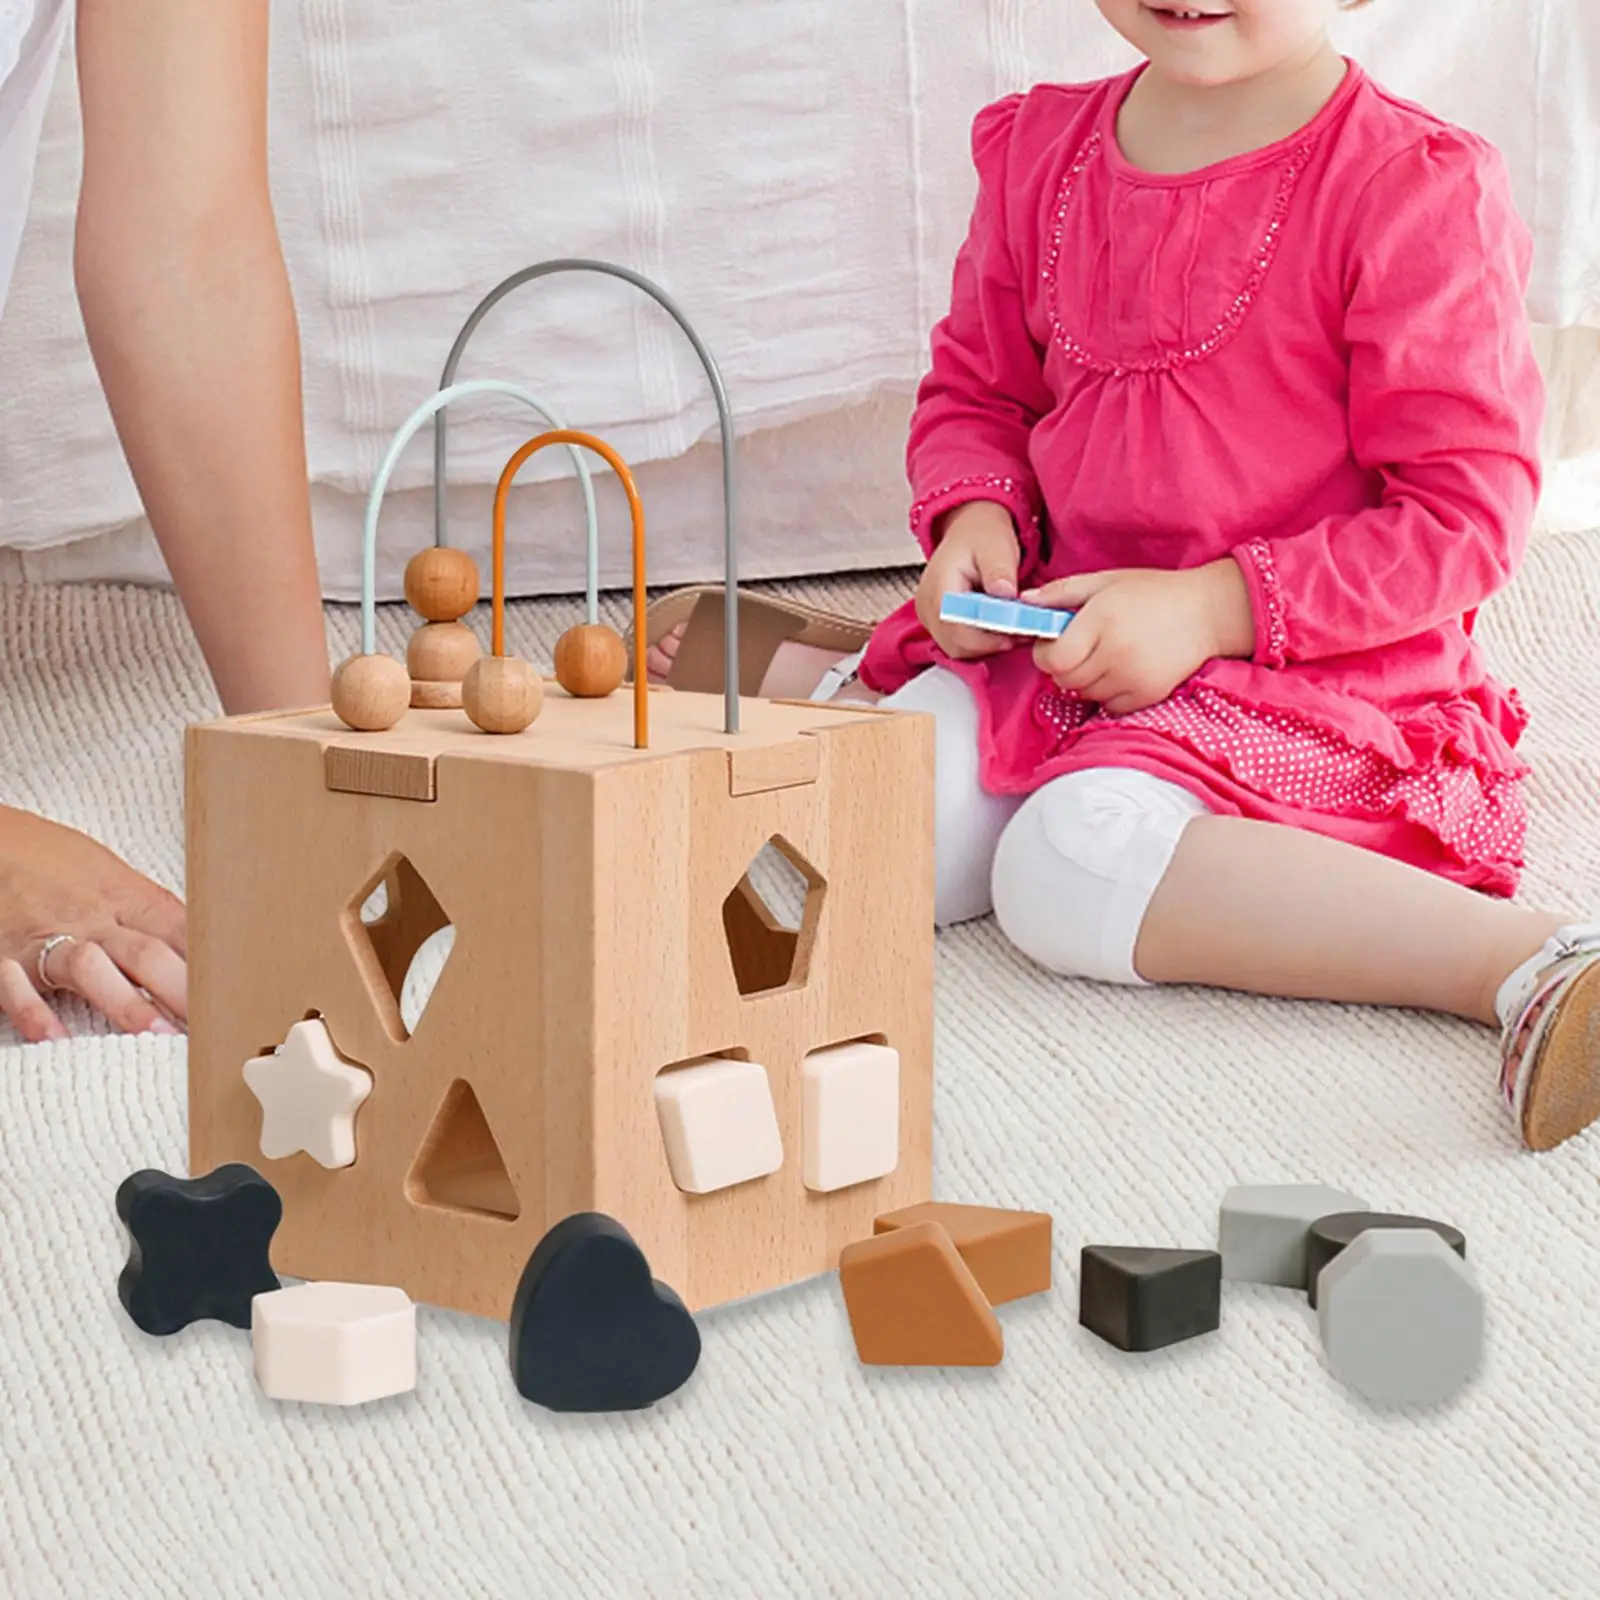 Baby Activity Cube Montessori Early Developmental Matching Sensory Montessori Shape Blocks for Imagination Activity Coordination